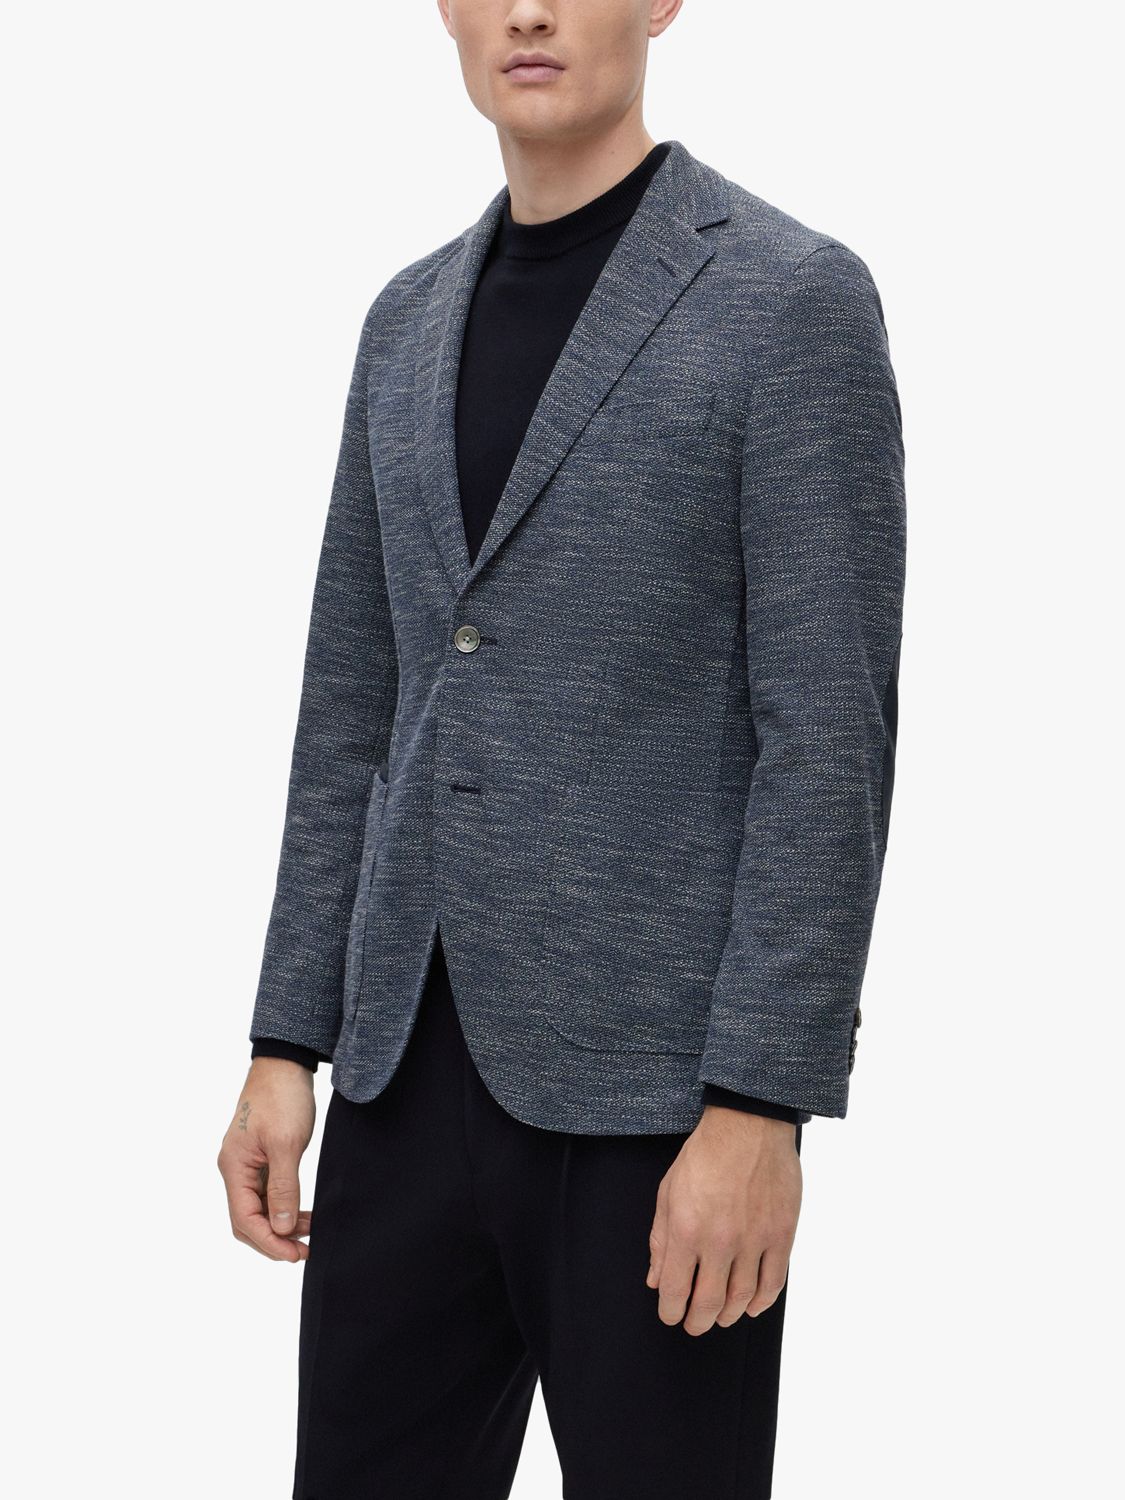 HUGO Jaye Elbow Patch Suit Jacket, Dark Blue at John Lewis & Partners